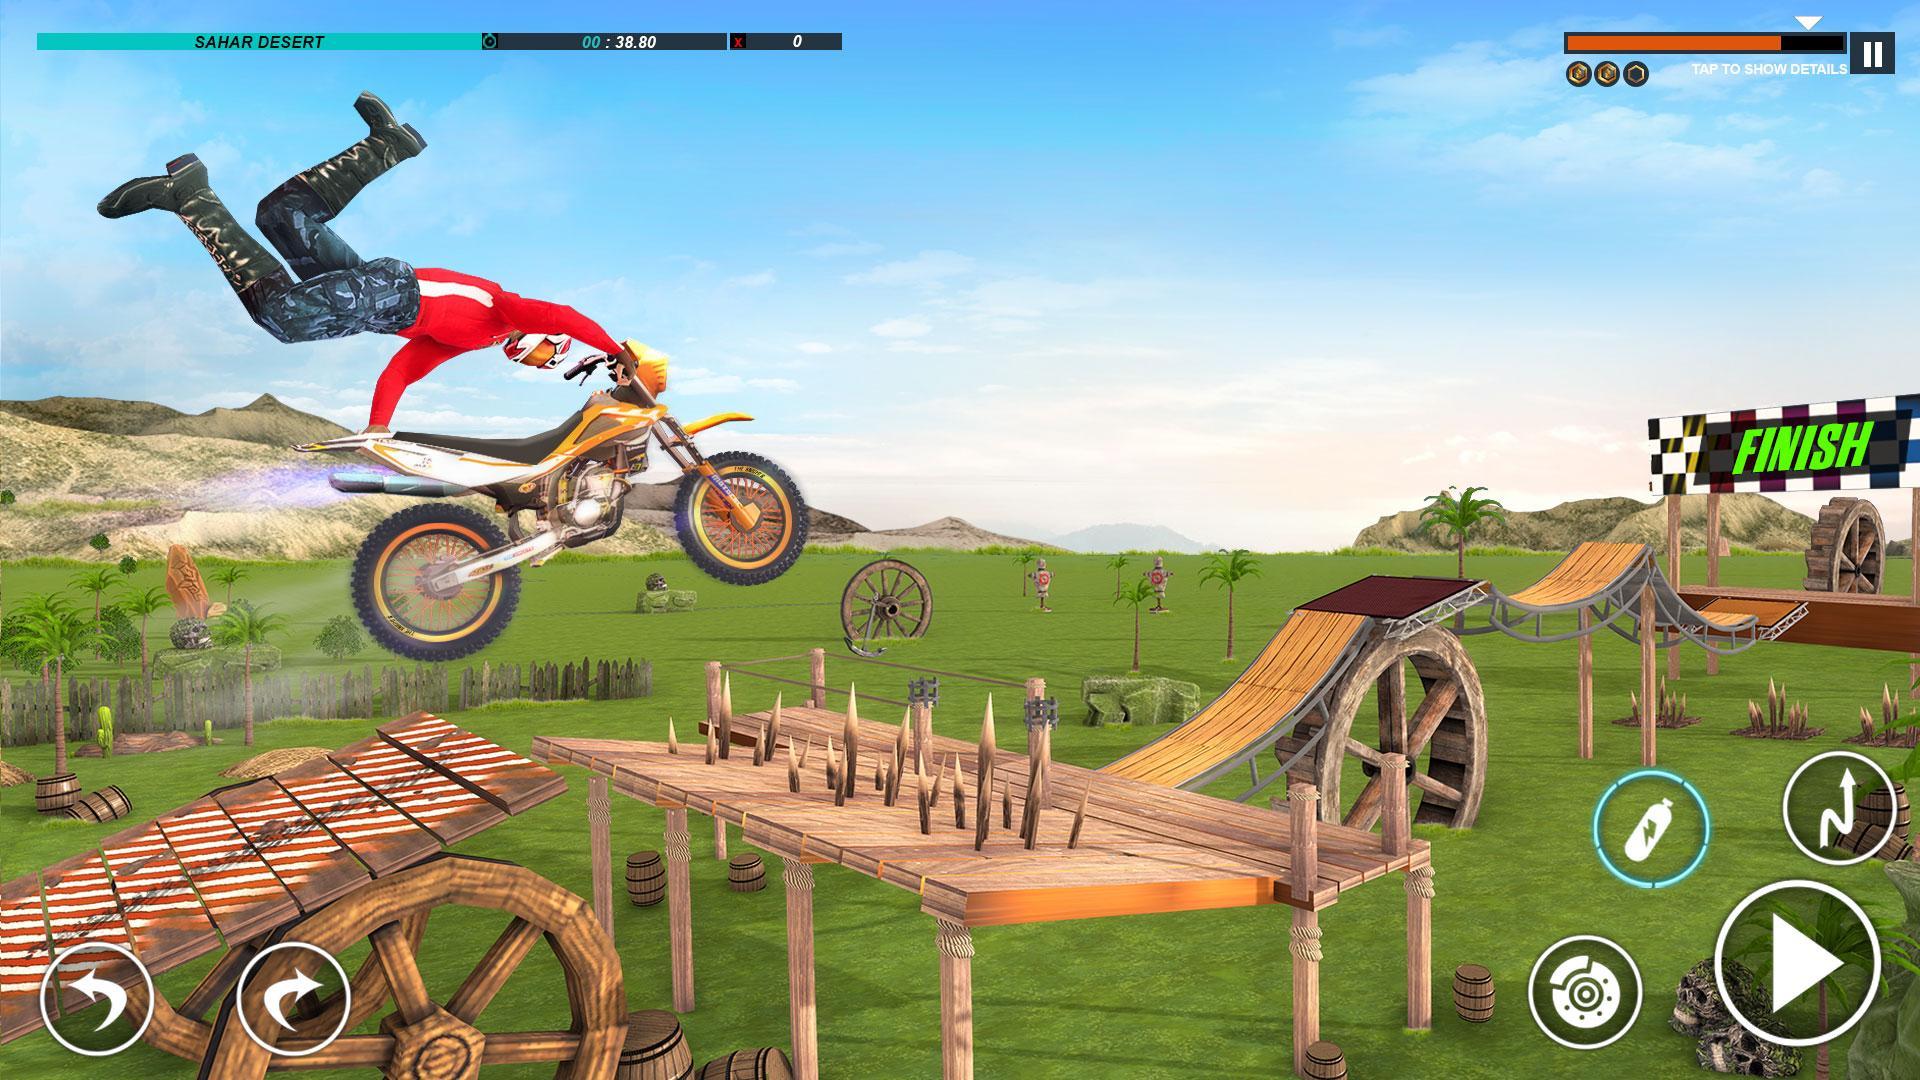 Bike Stunt 2 Bike Racing Game - Screen 7.jpg?fakeurl=1&type=